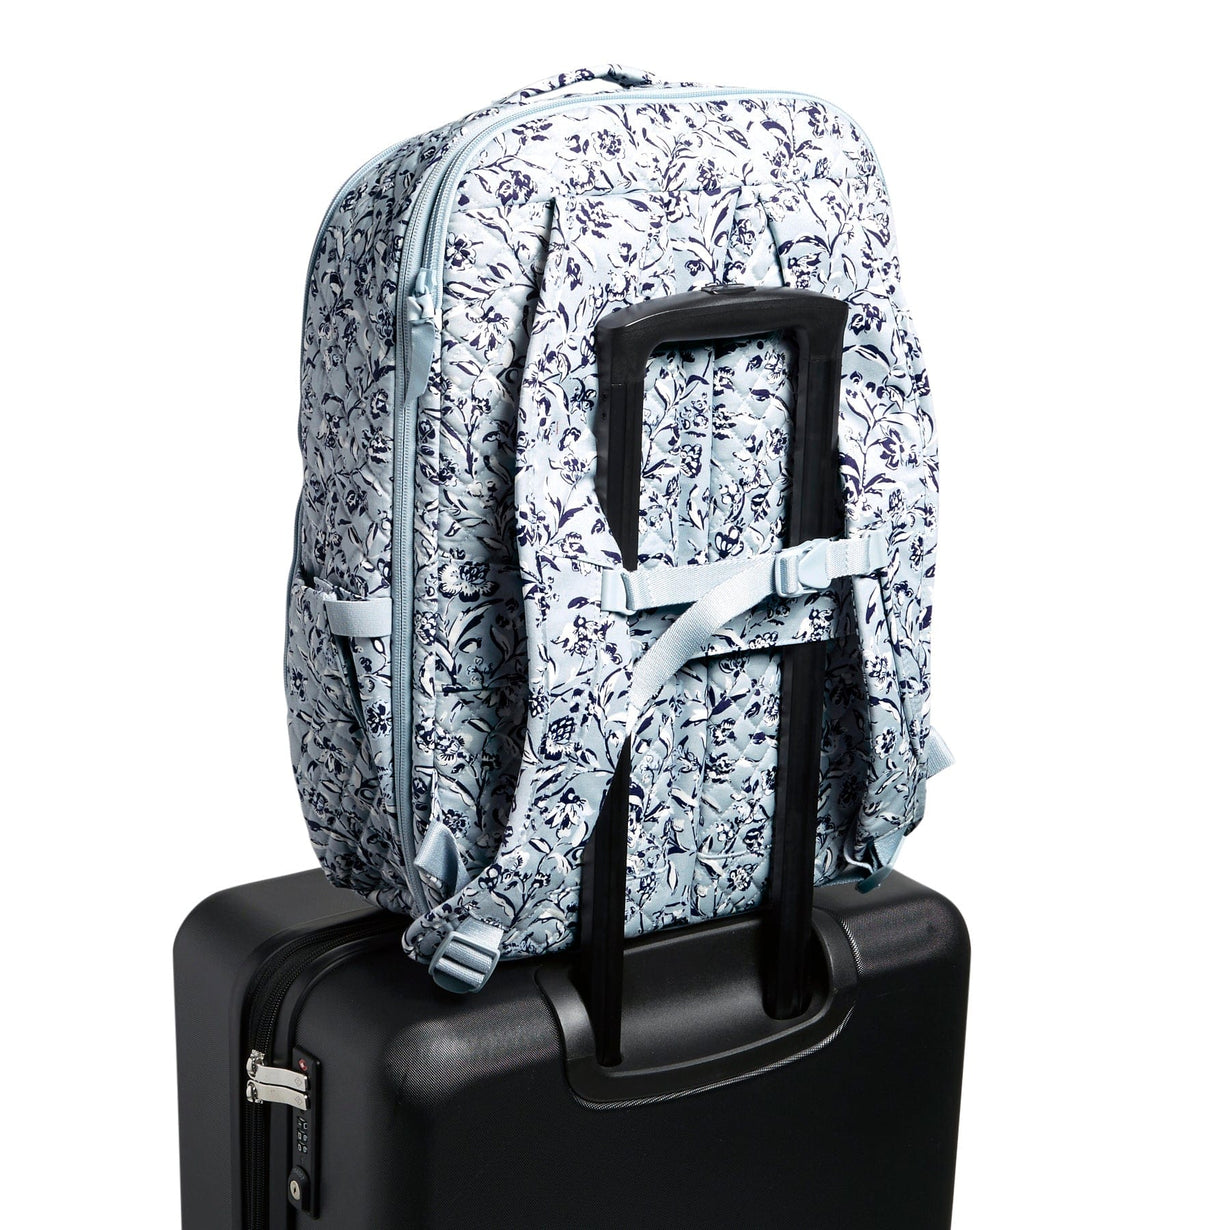 Large Travel Backpack - Cotton | Vera Bradley